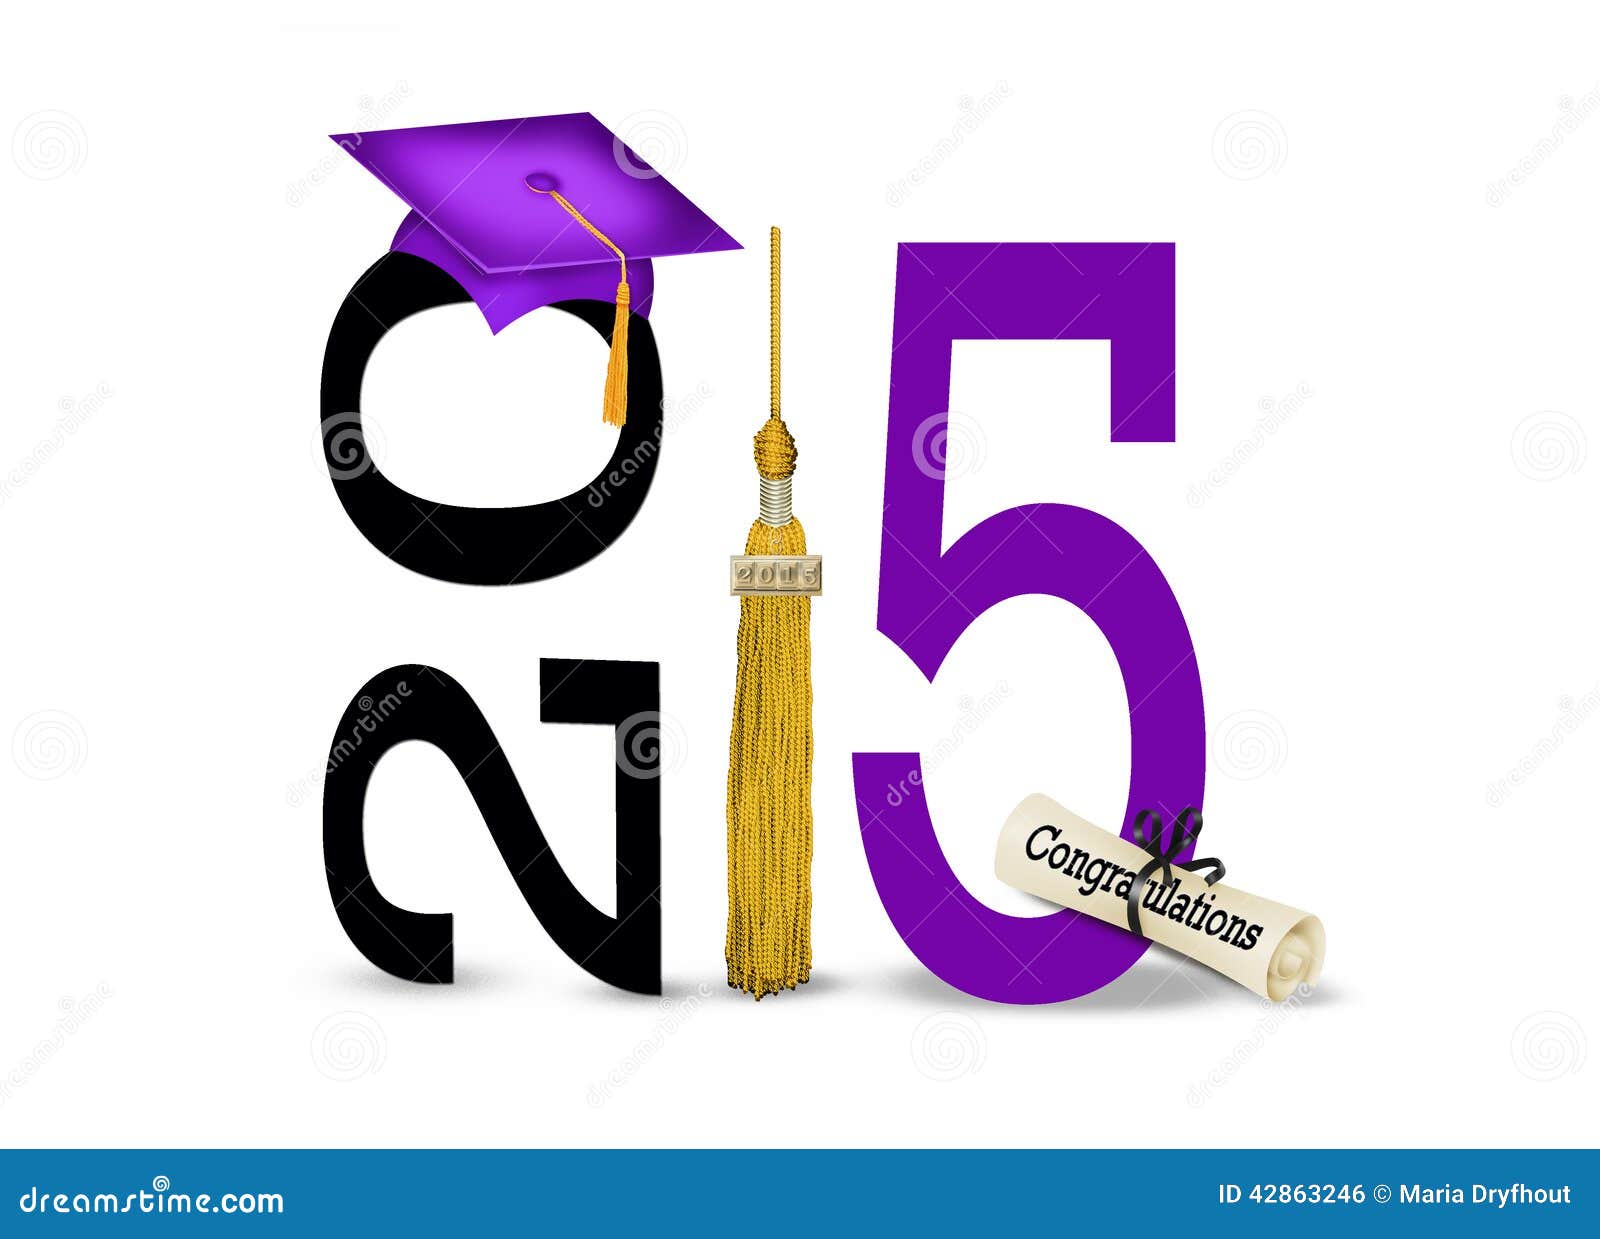 purple graduation cap clip art free - photo #33